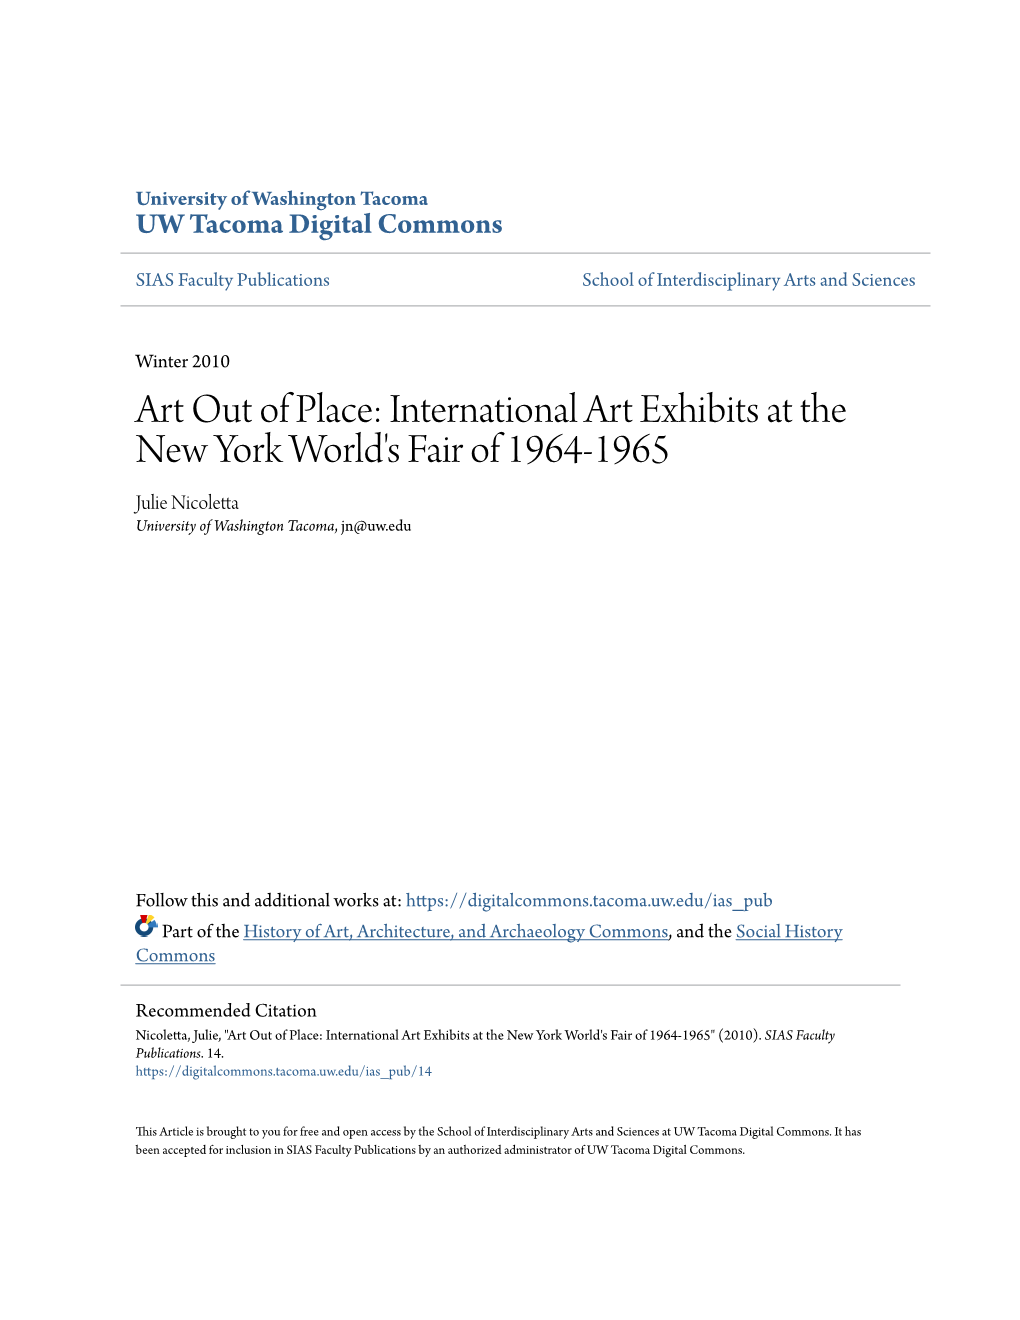 International Art Exhibits at the New York World's Fair of 1964-1965 Julie Nicoletta University of Washington Tacoma, Jn@Uw.Edu